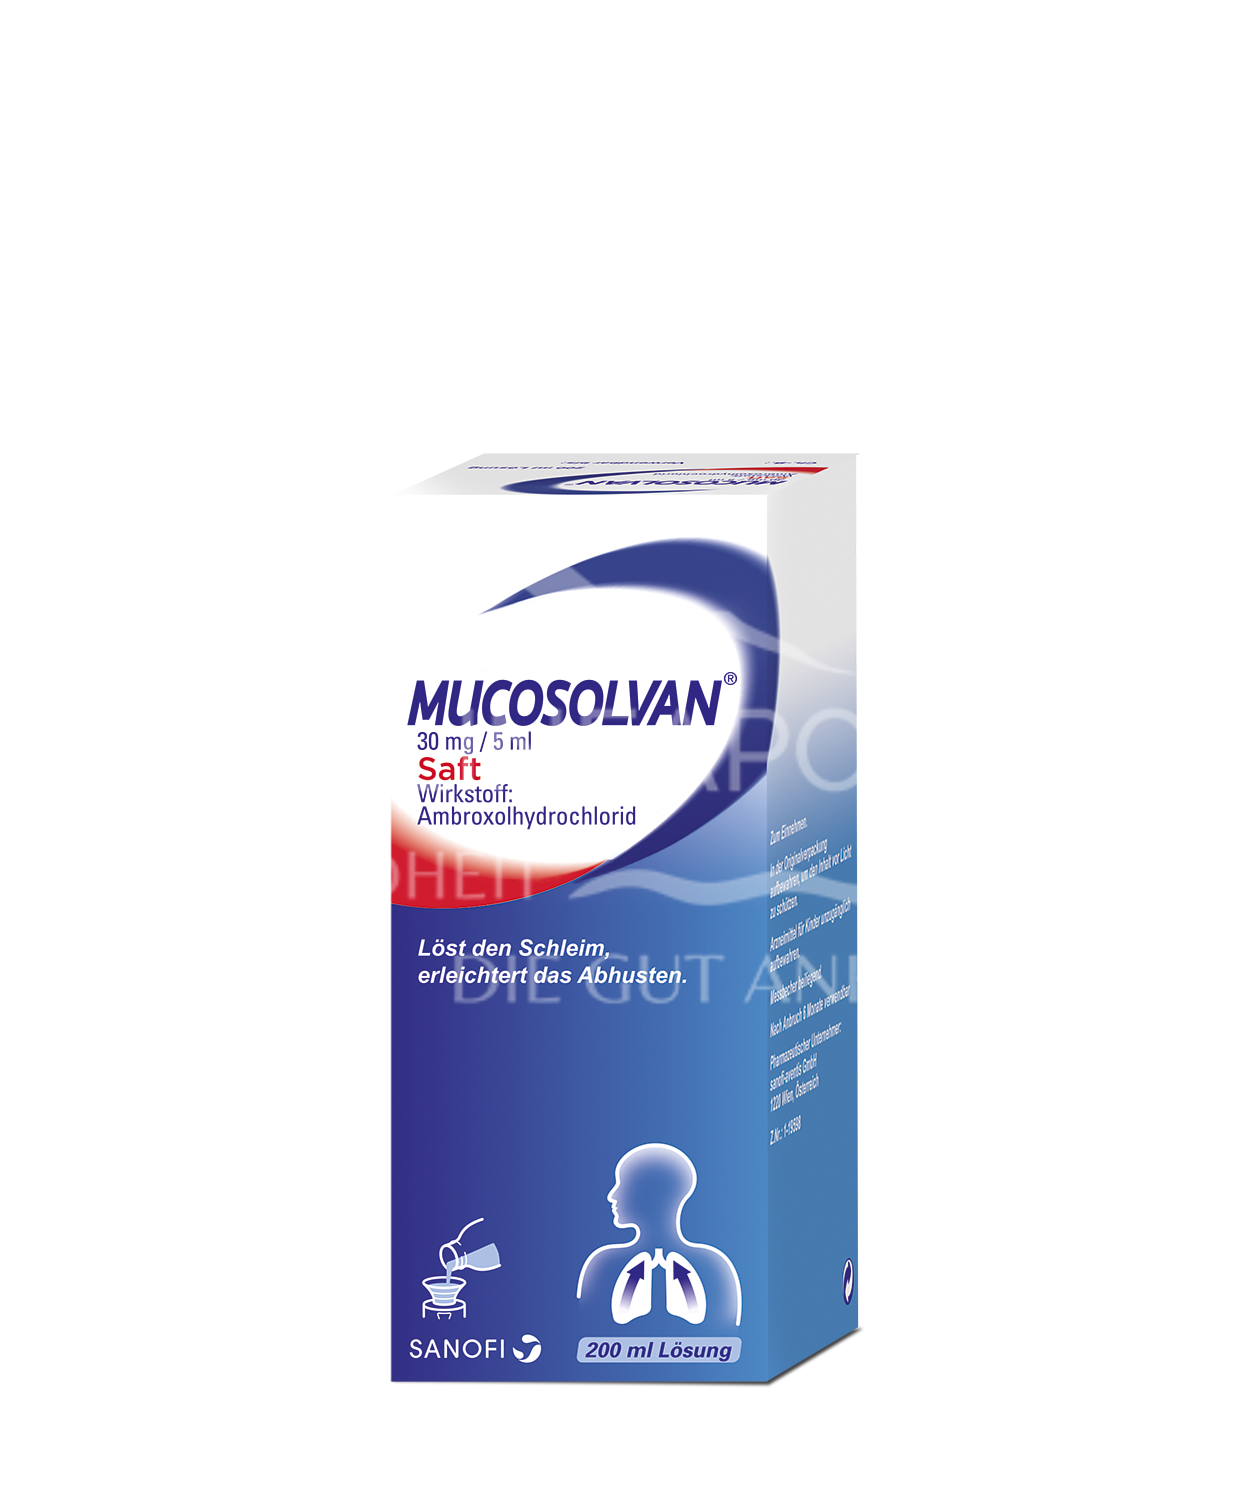 Mucosolvan® Saft 30 mg / 5 ml